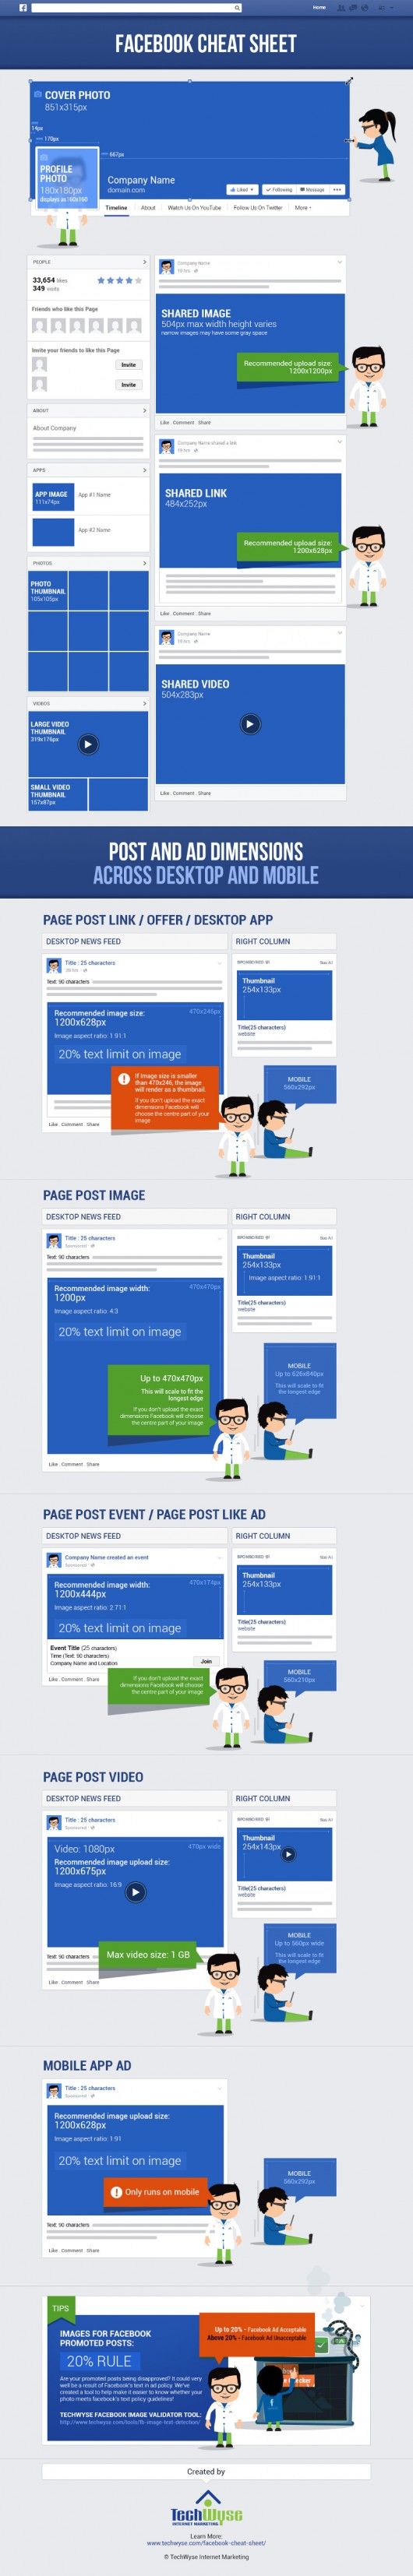 Facebook Cheat Sheet by TechWyse